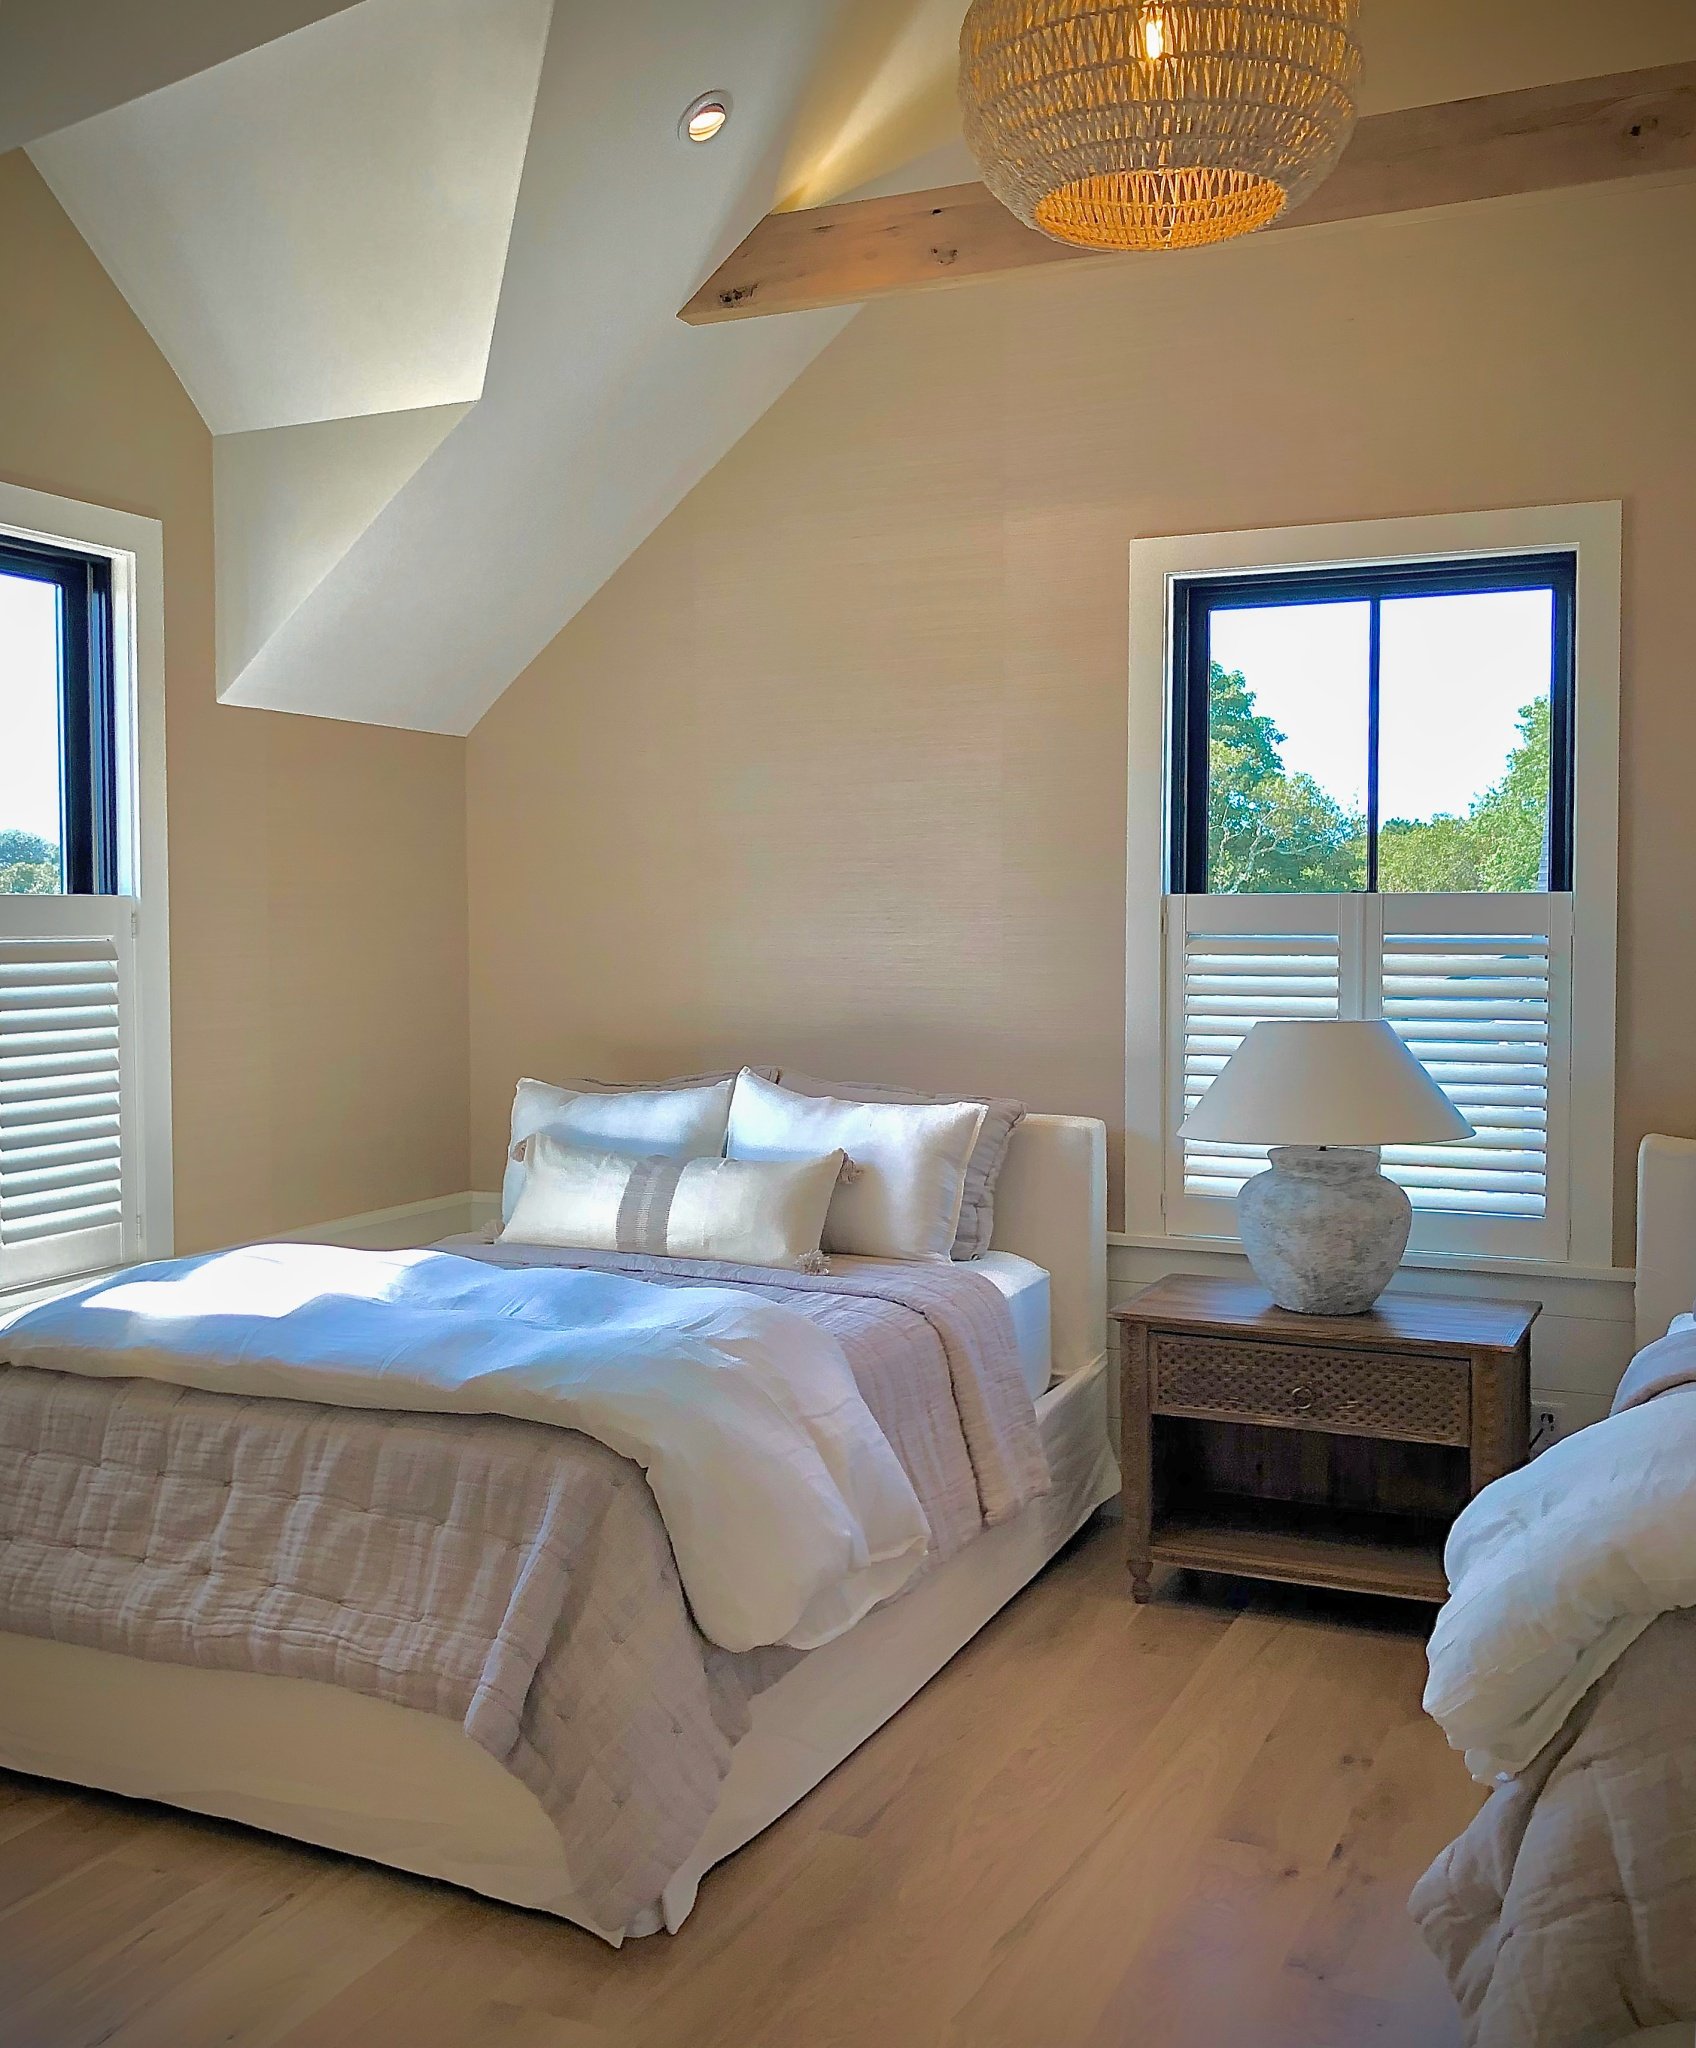 Puwal_lane_coastal_modern_farmhouse_colonial_fusion_bedroom.jpg